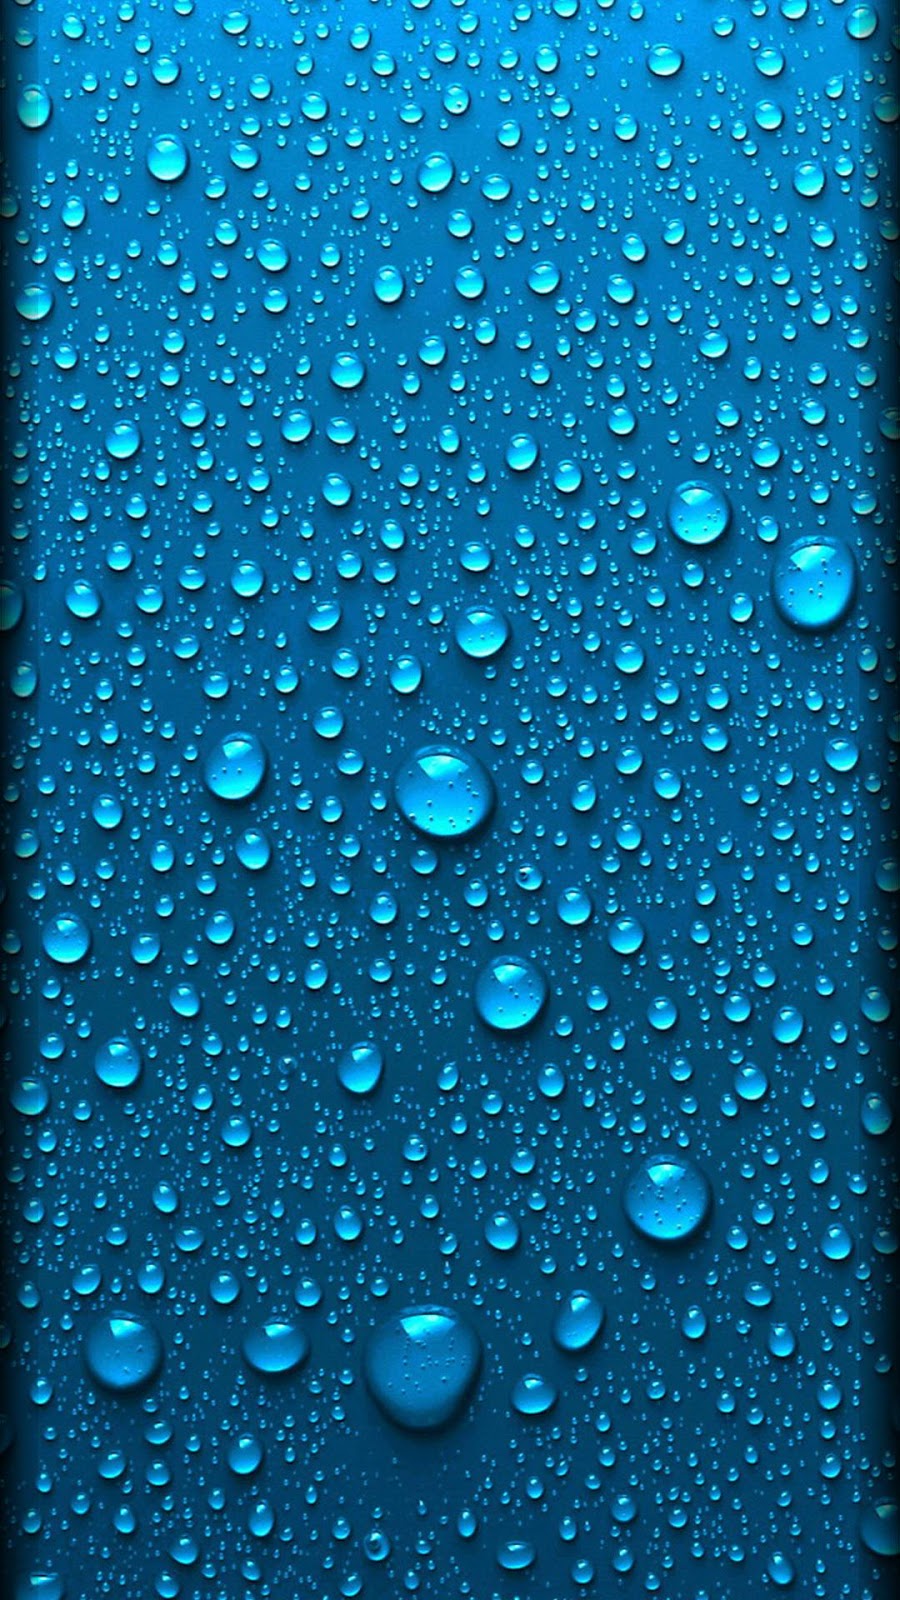 Hd Wallpaper For Mobile मोबाइल वॉलपेपर डाउनलोड - Samsung Galaxy A5 - HD Wallpaper 